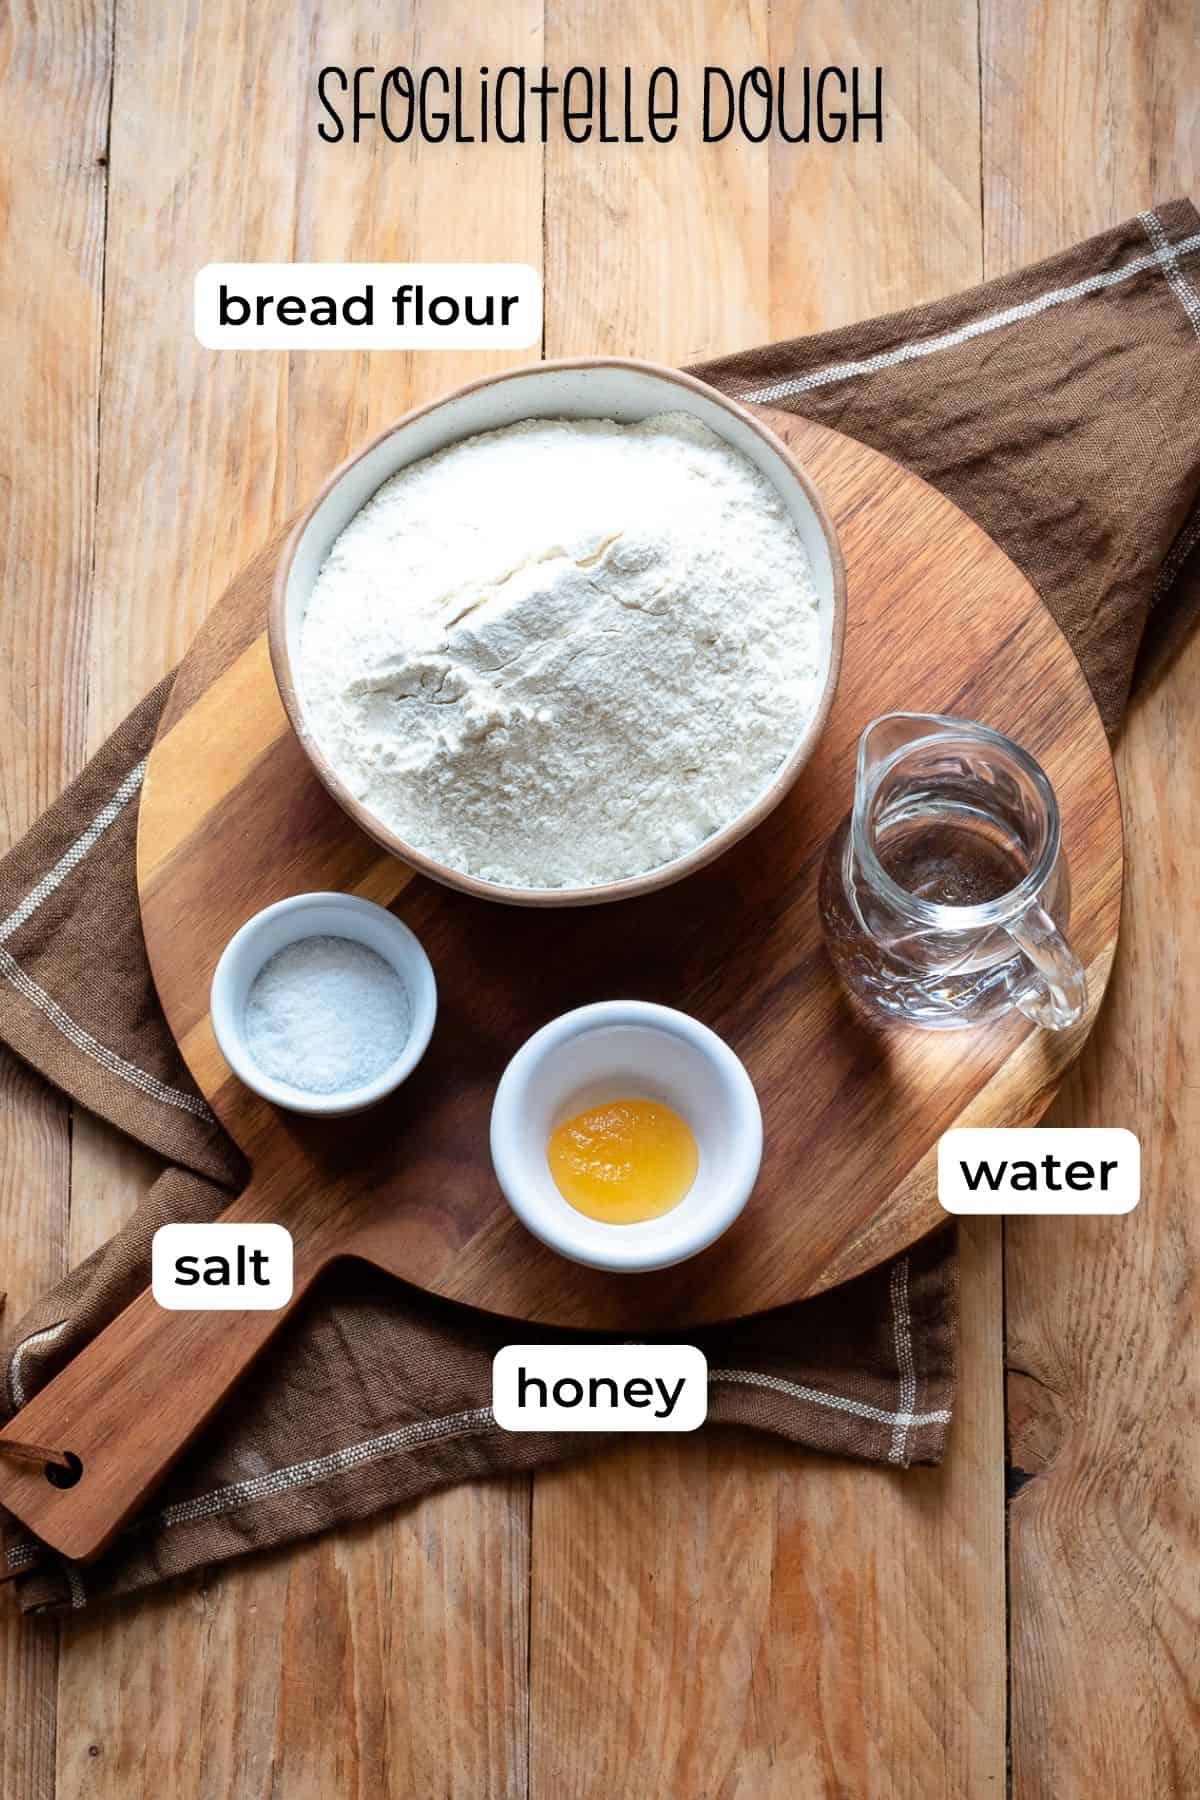 Ingredients for sfogliatelle dough.